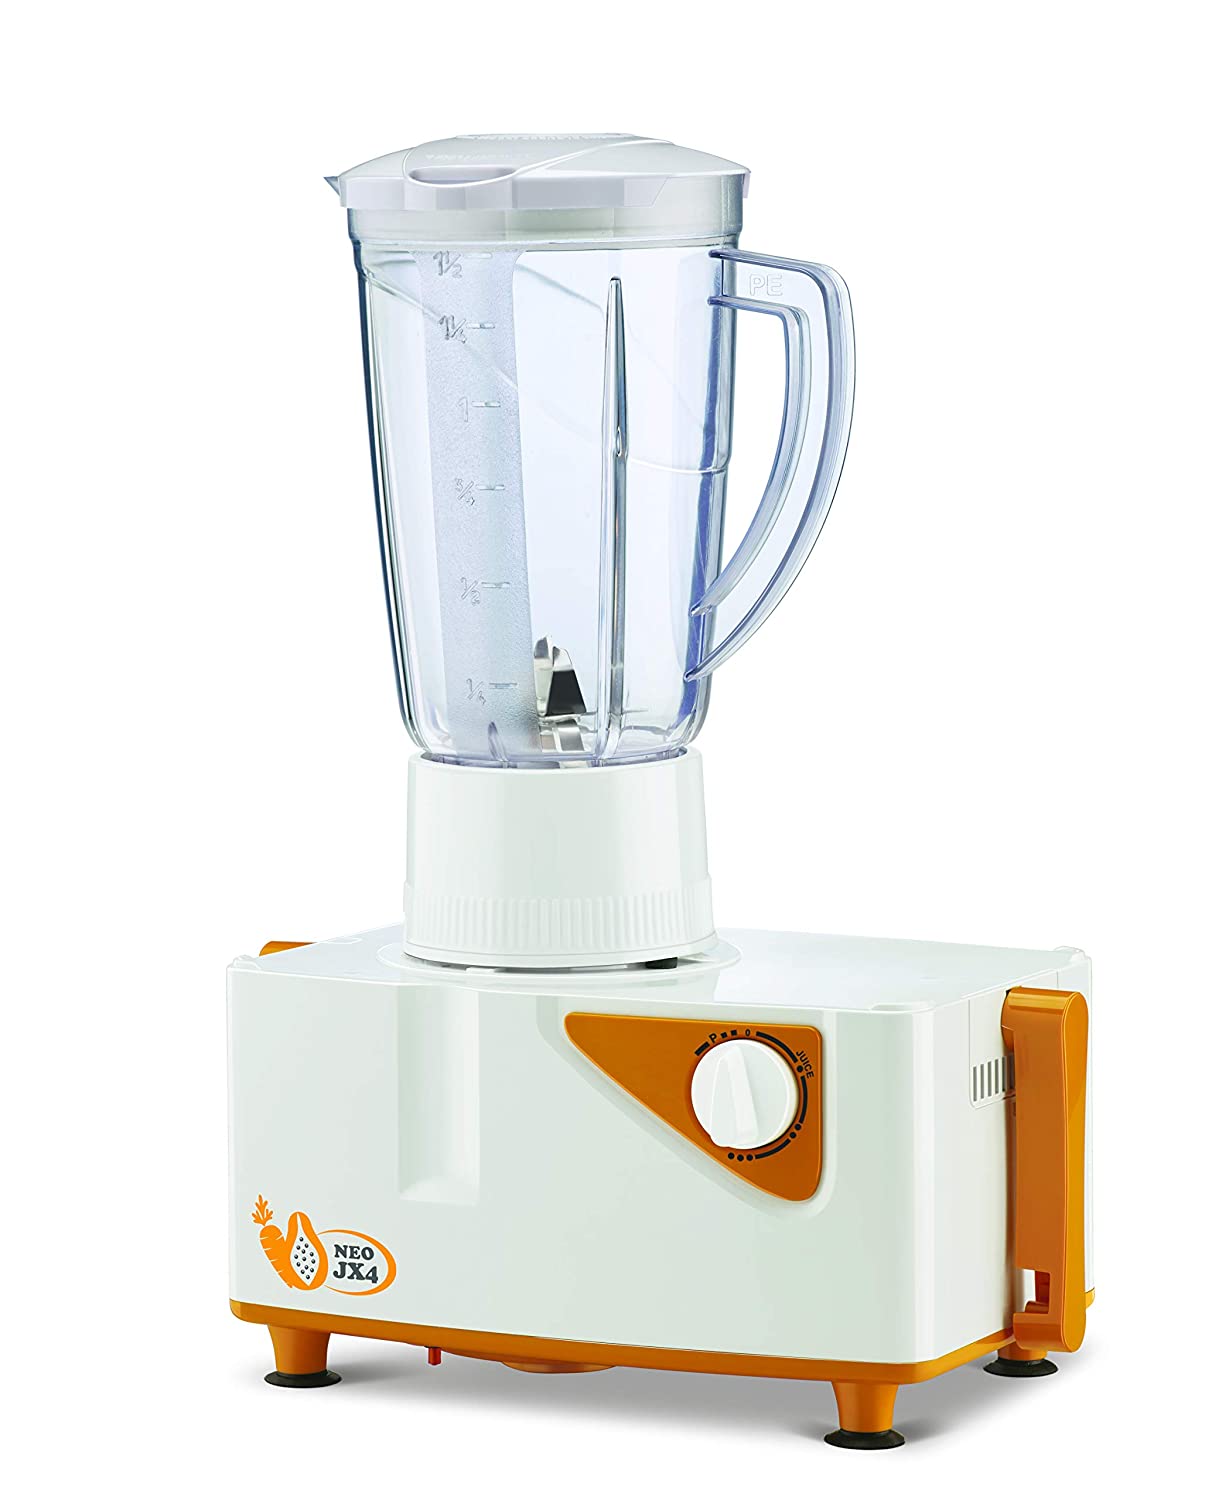 Bajaj Neo JX 4 450-Watt Juicer Mixer Grinder with 2 Jars (White/Orange) - Mahajan Electronics Online